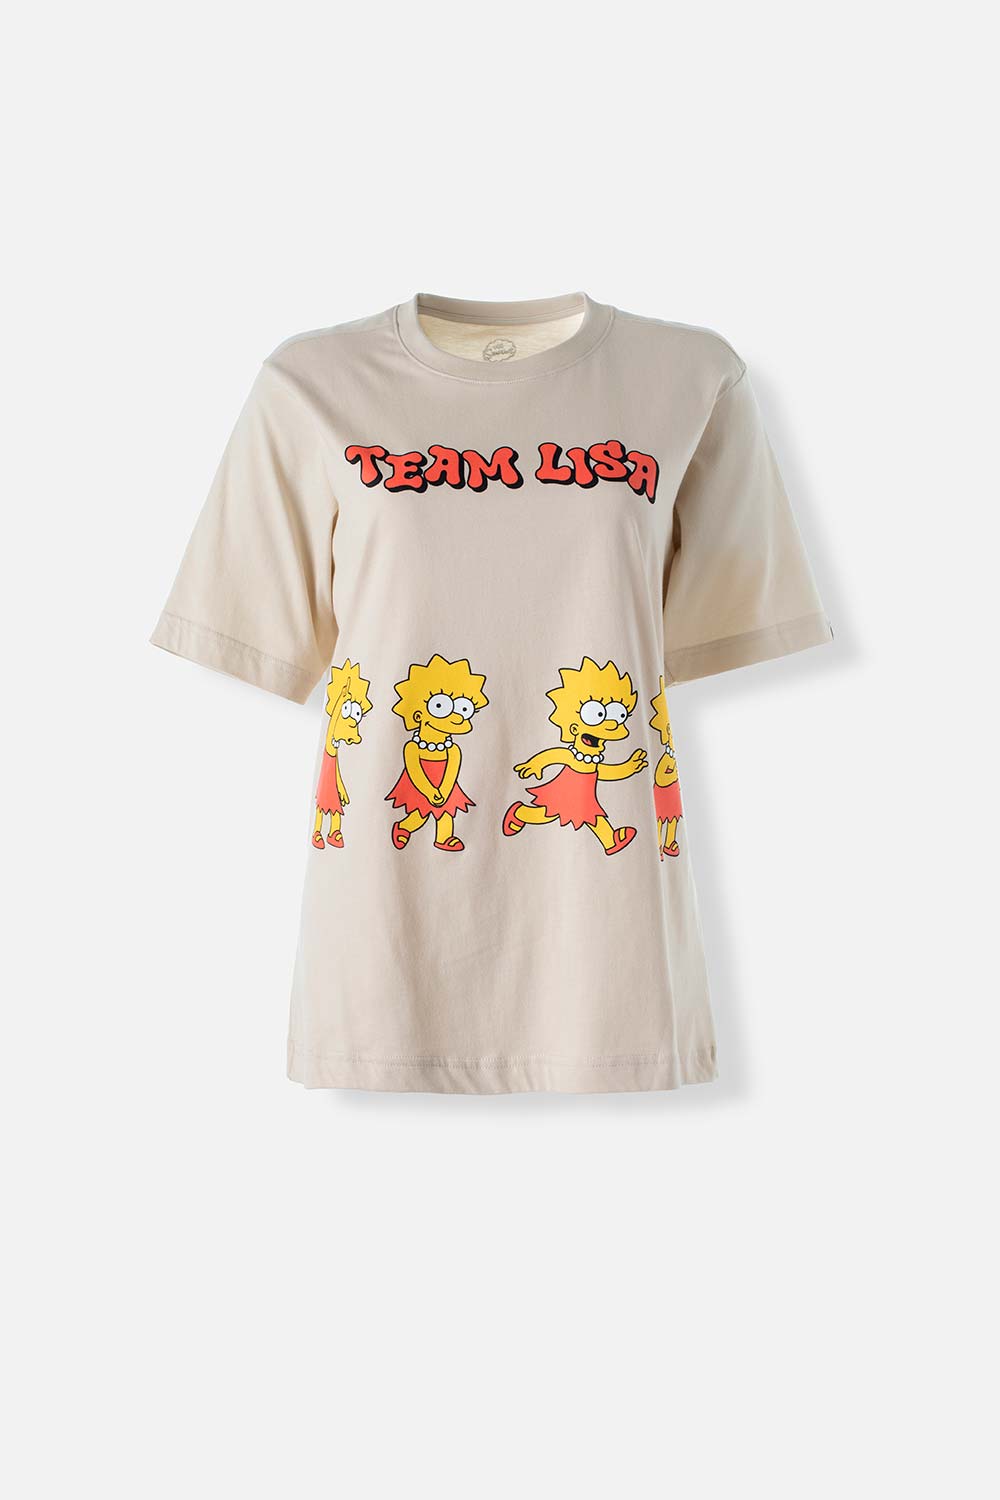 Camiseta de Los Simpsons manga corta caqui para mujer XS-0